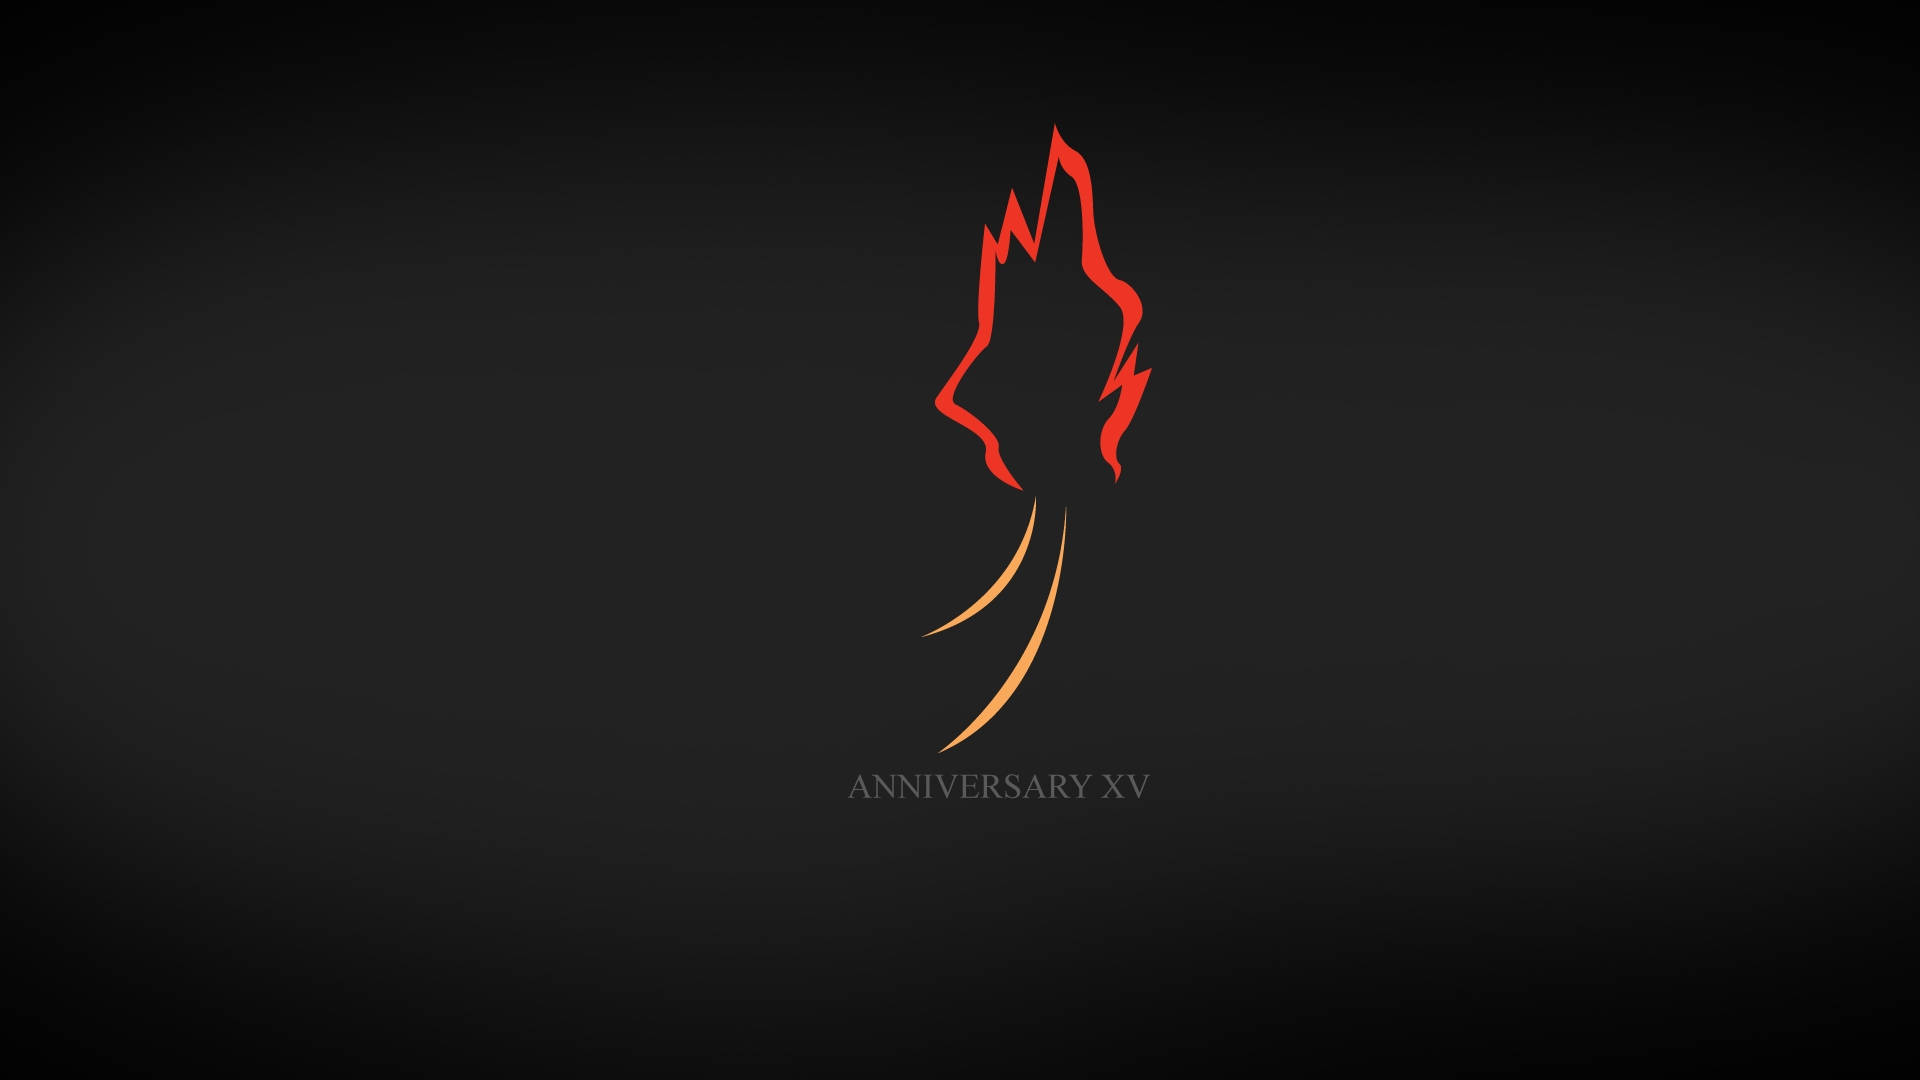 The Flame Of Friendship Burning Bright! #charmander #pokemon #firebreathing Background